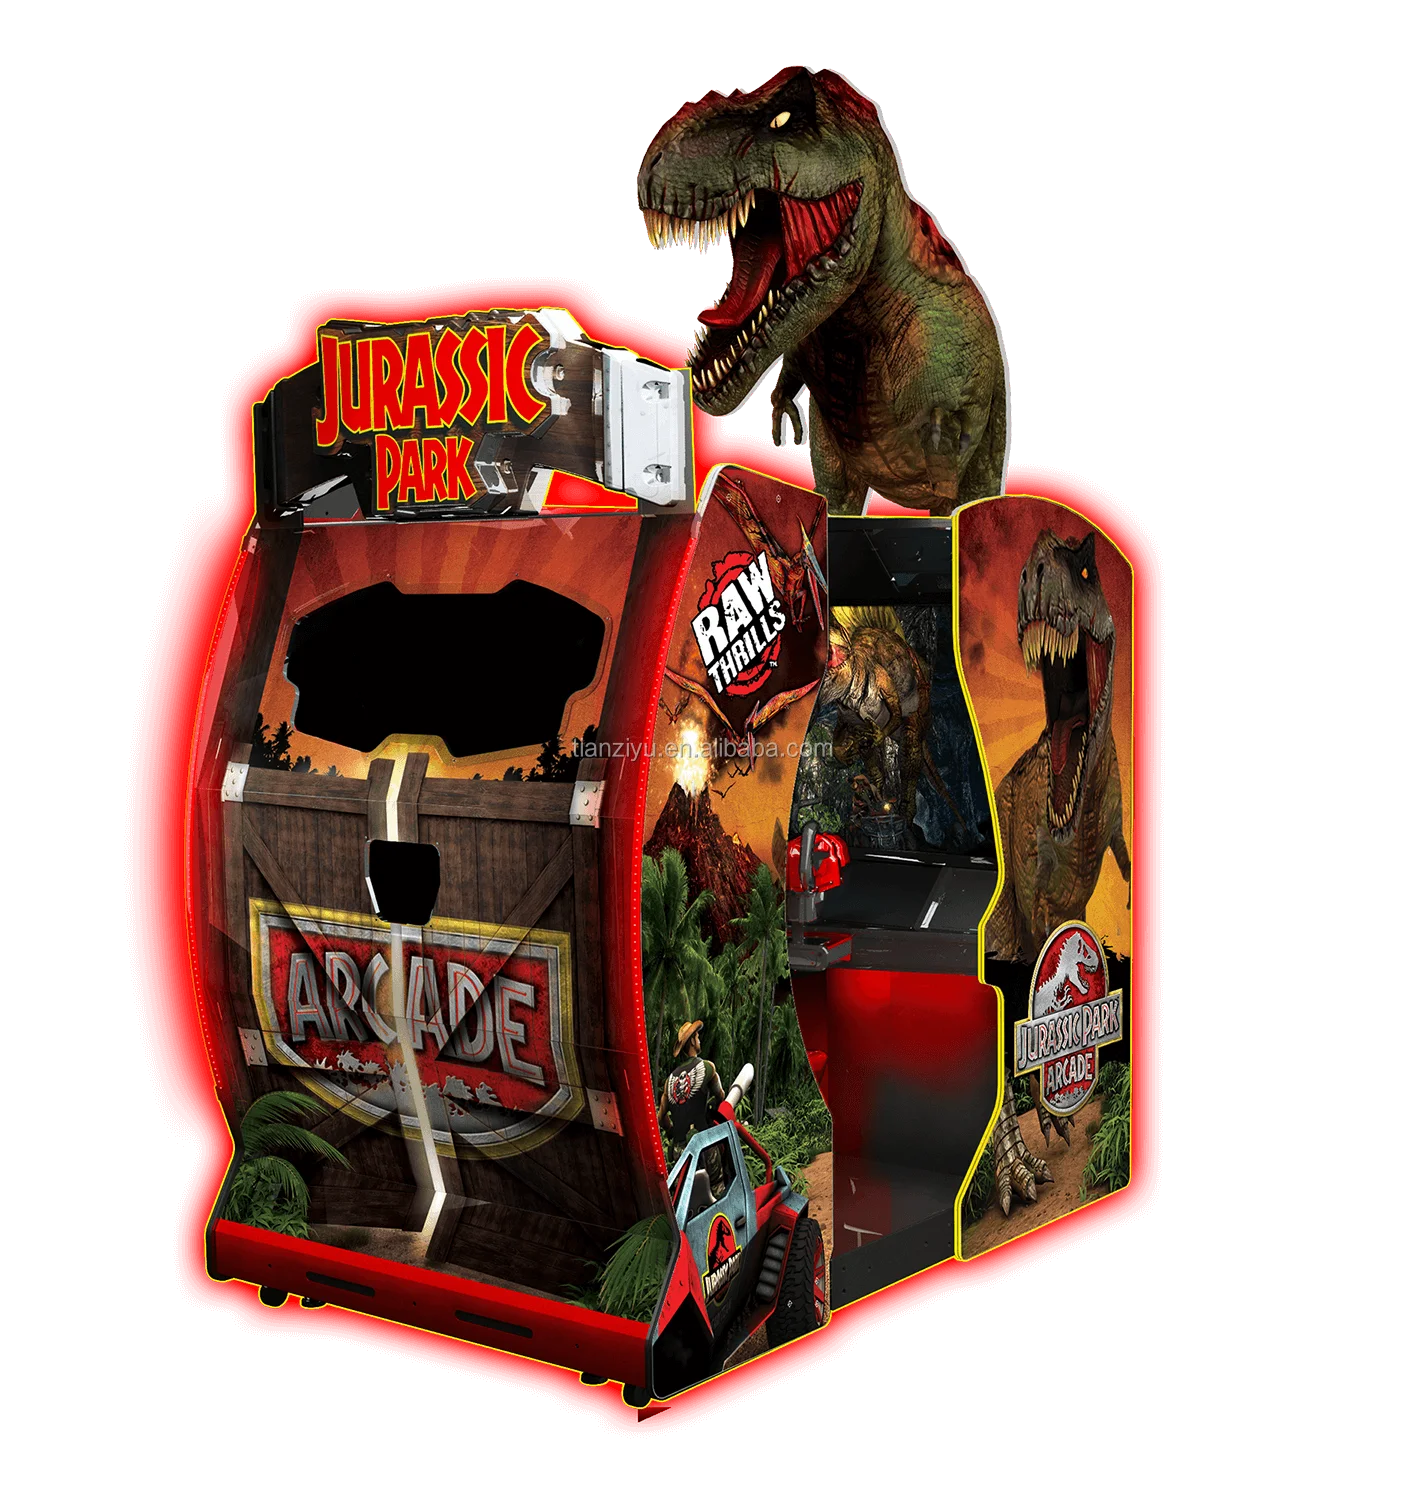 Jurassic Park Arcade Gun Shooting Simulator Yang Dioperasikan dengan Koin Elektronik Mesin Permainan